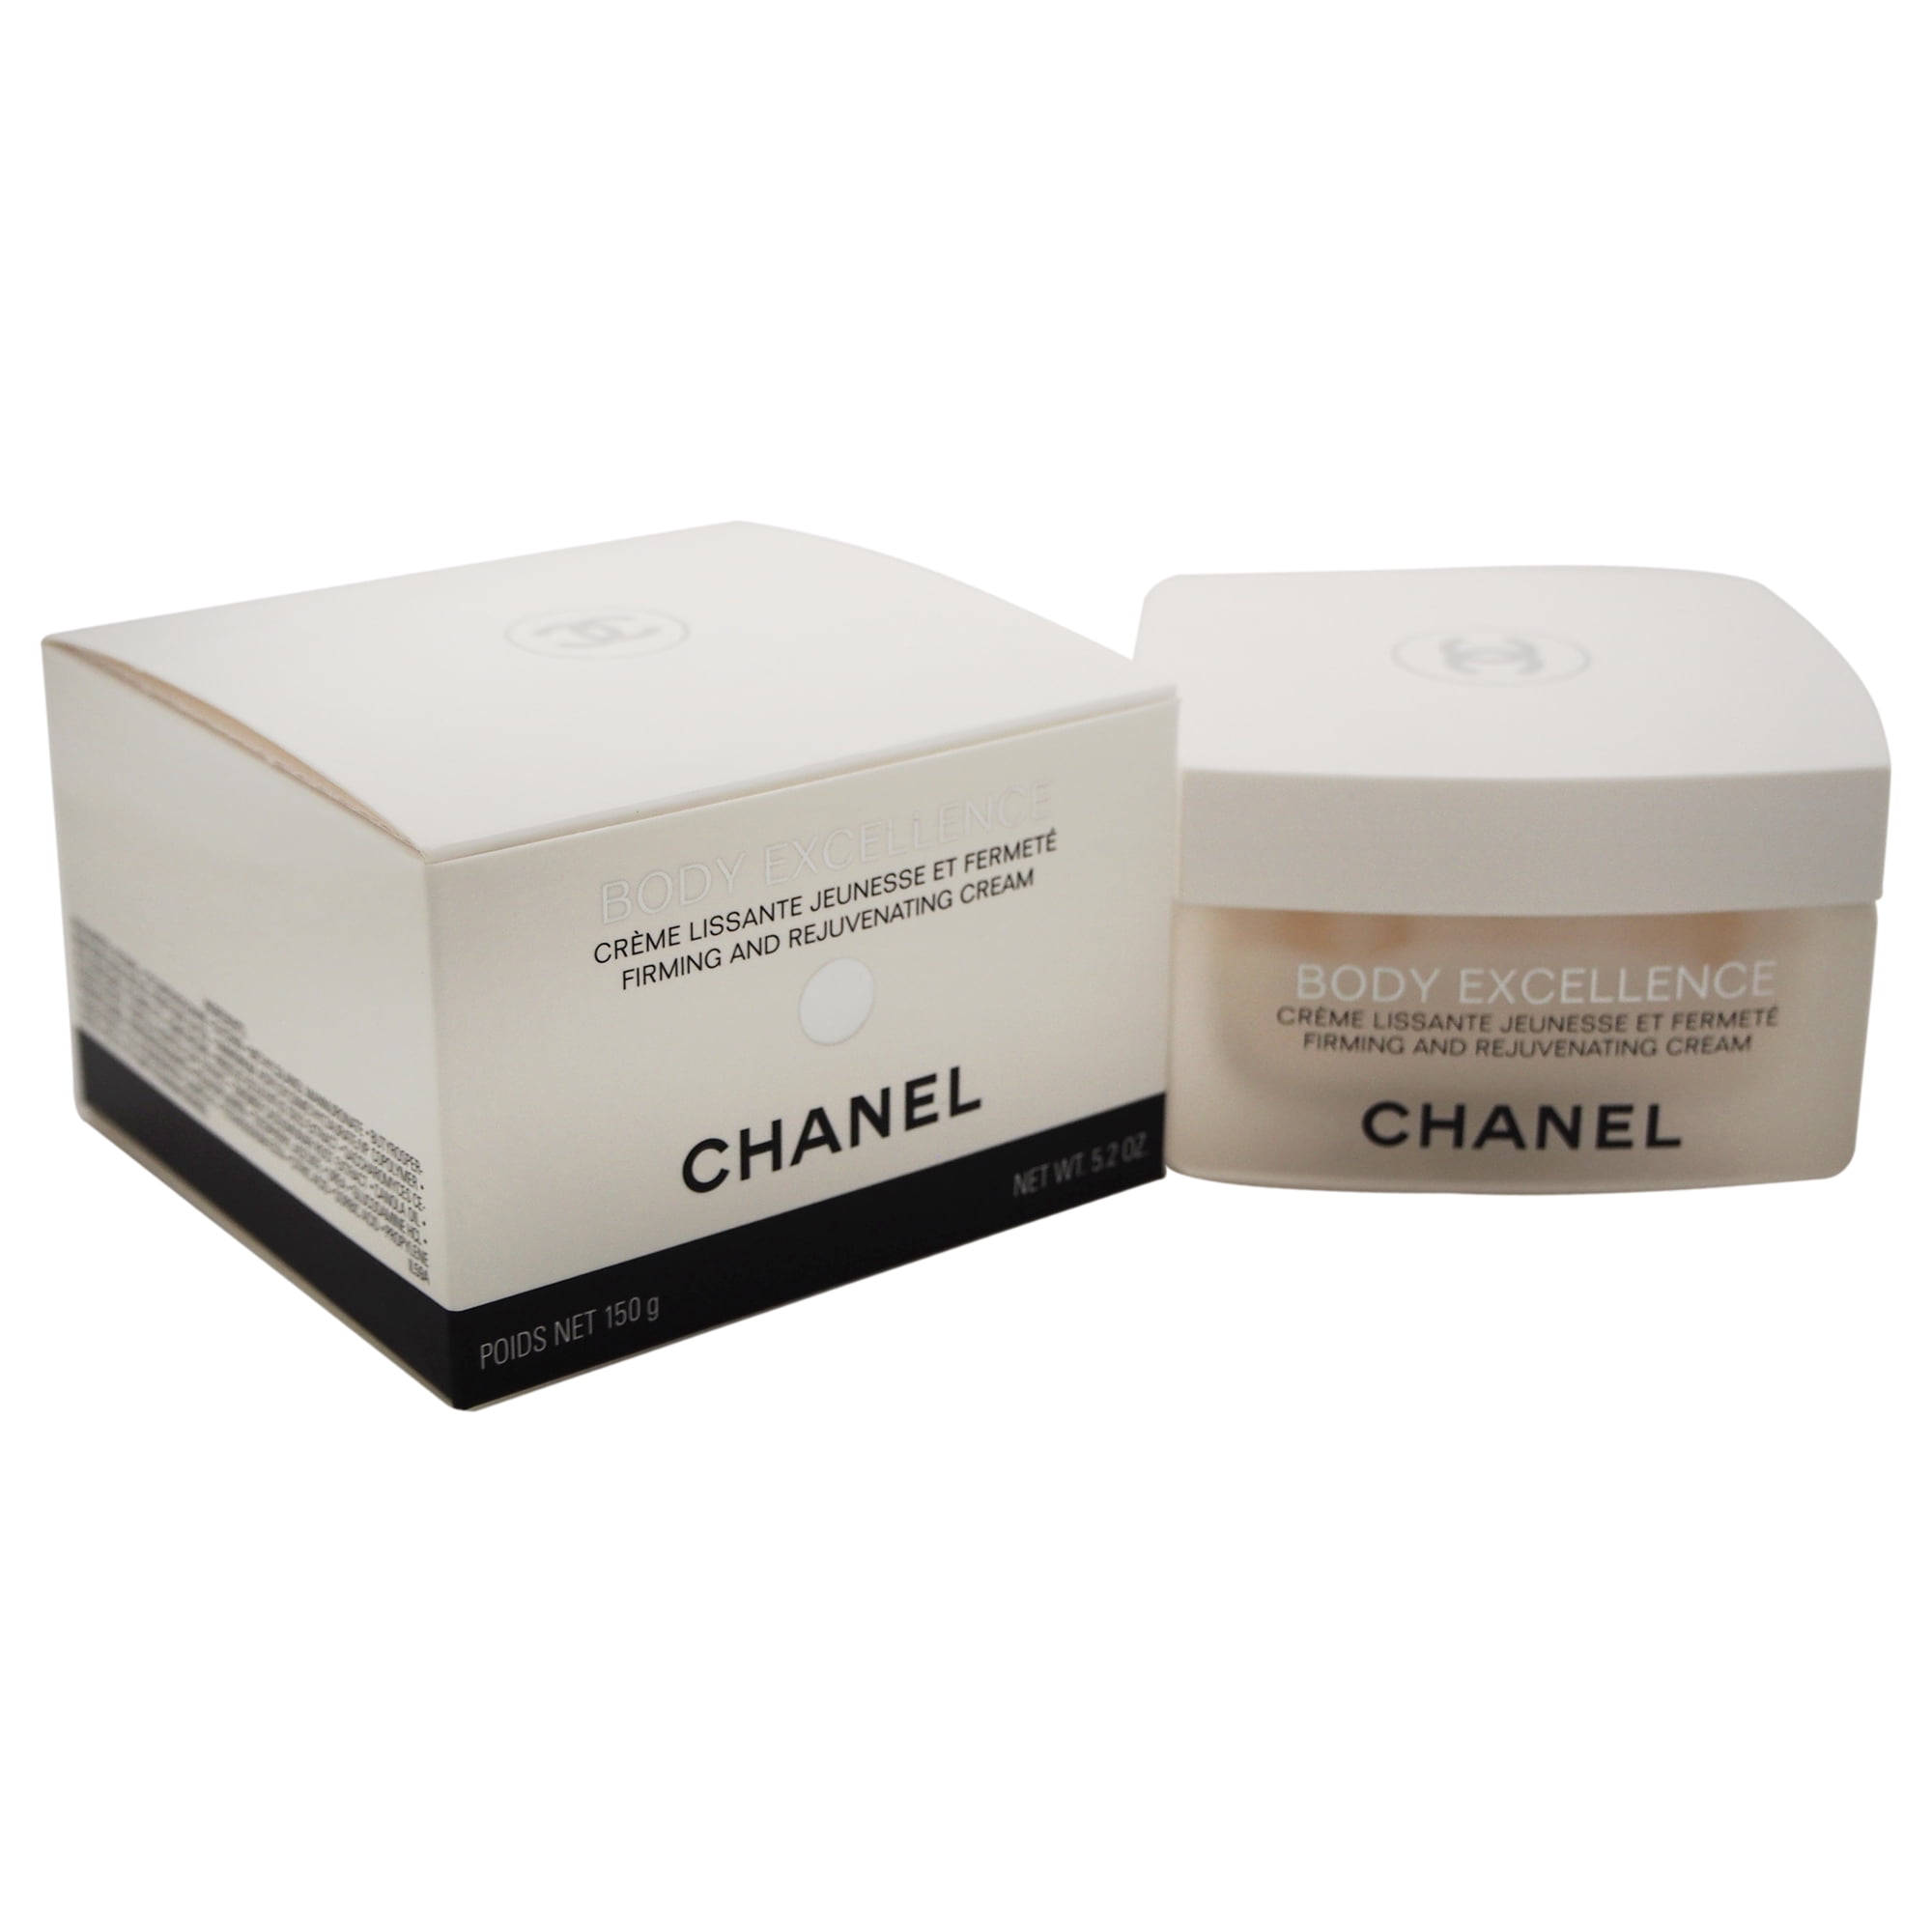 Chanel Body Excellence Firming & Rejuvenating Cream 5.07 oz Cream ...